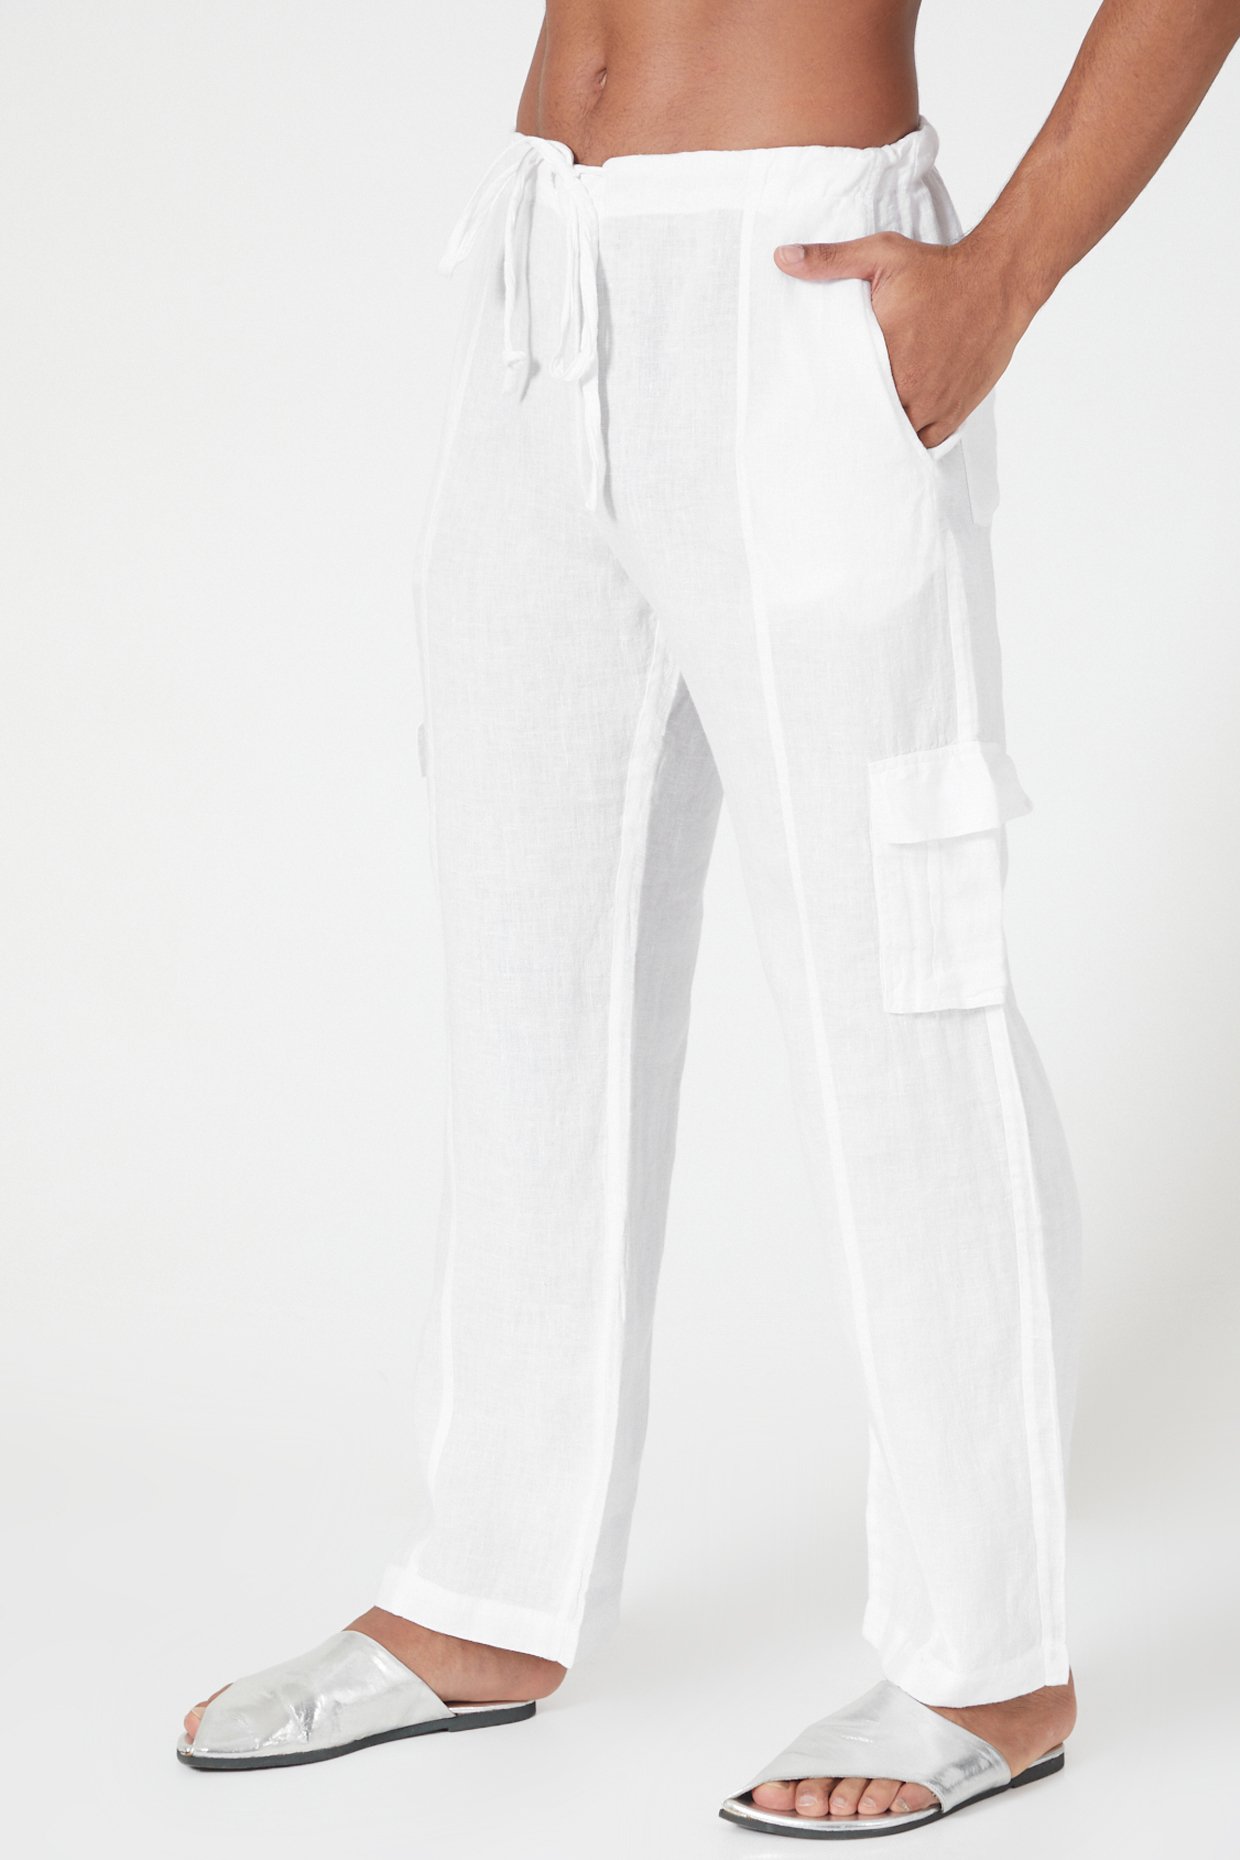 Buy Drawstring Pants For Men Online